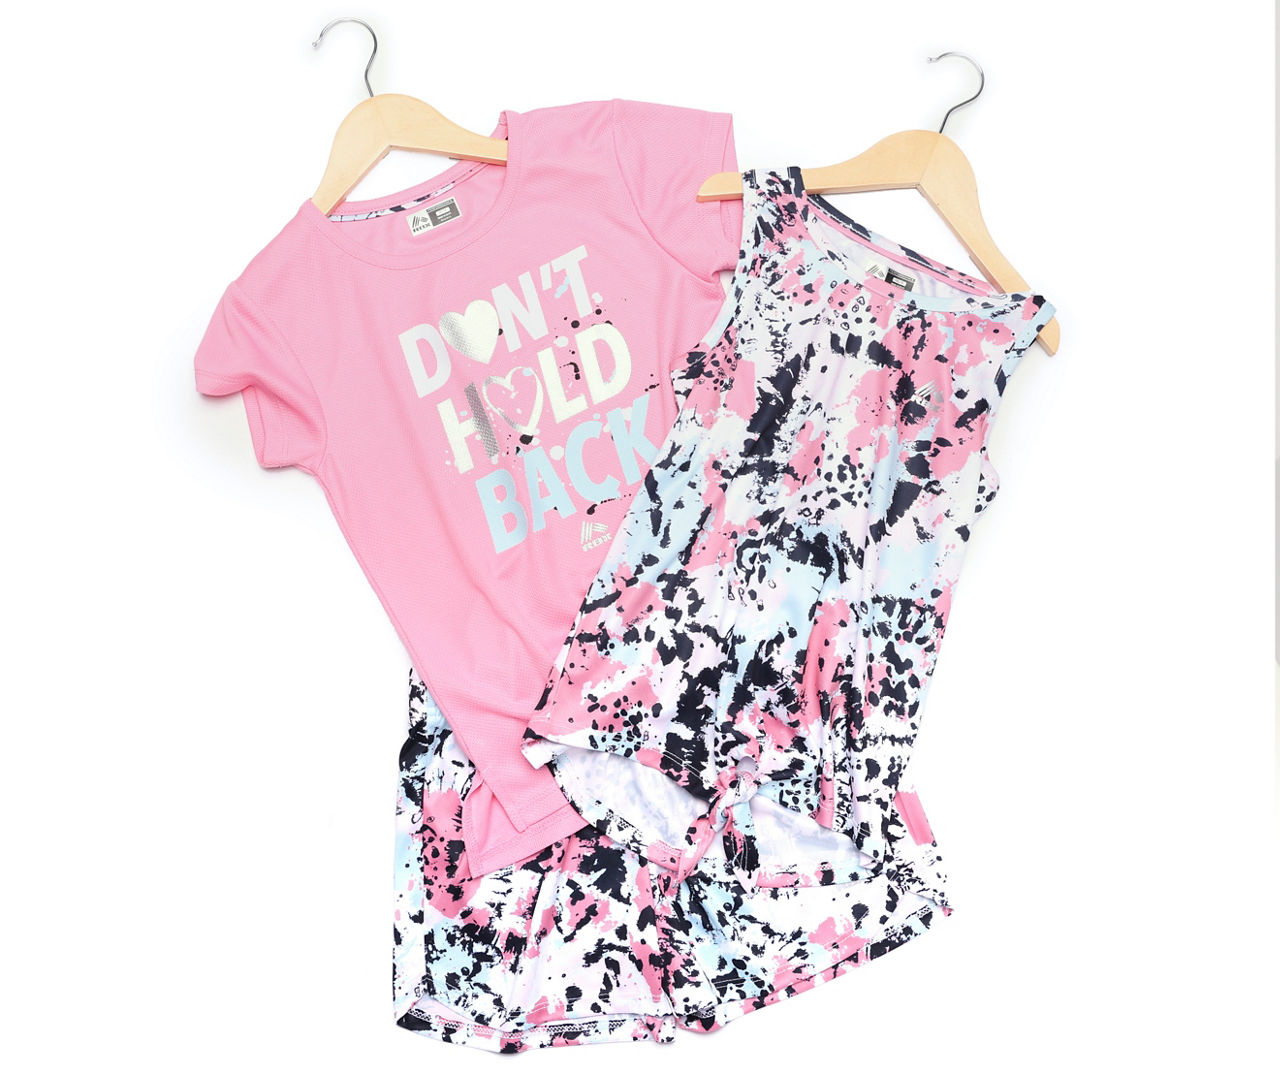 Kids' Size 7/8 "Don't Hold Back" Pink & Black Splatter 3-Piece Outfit